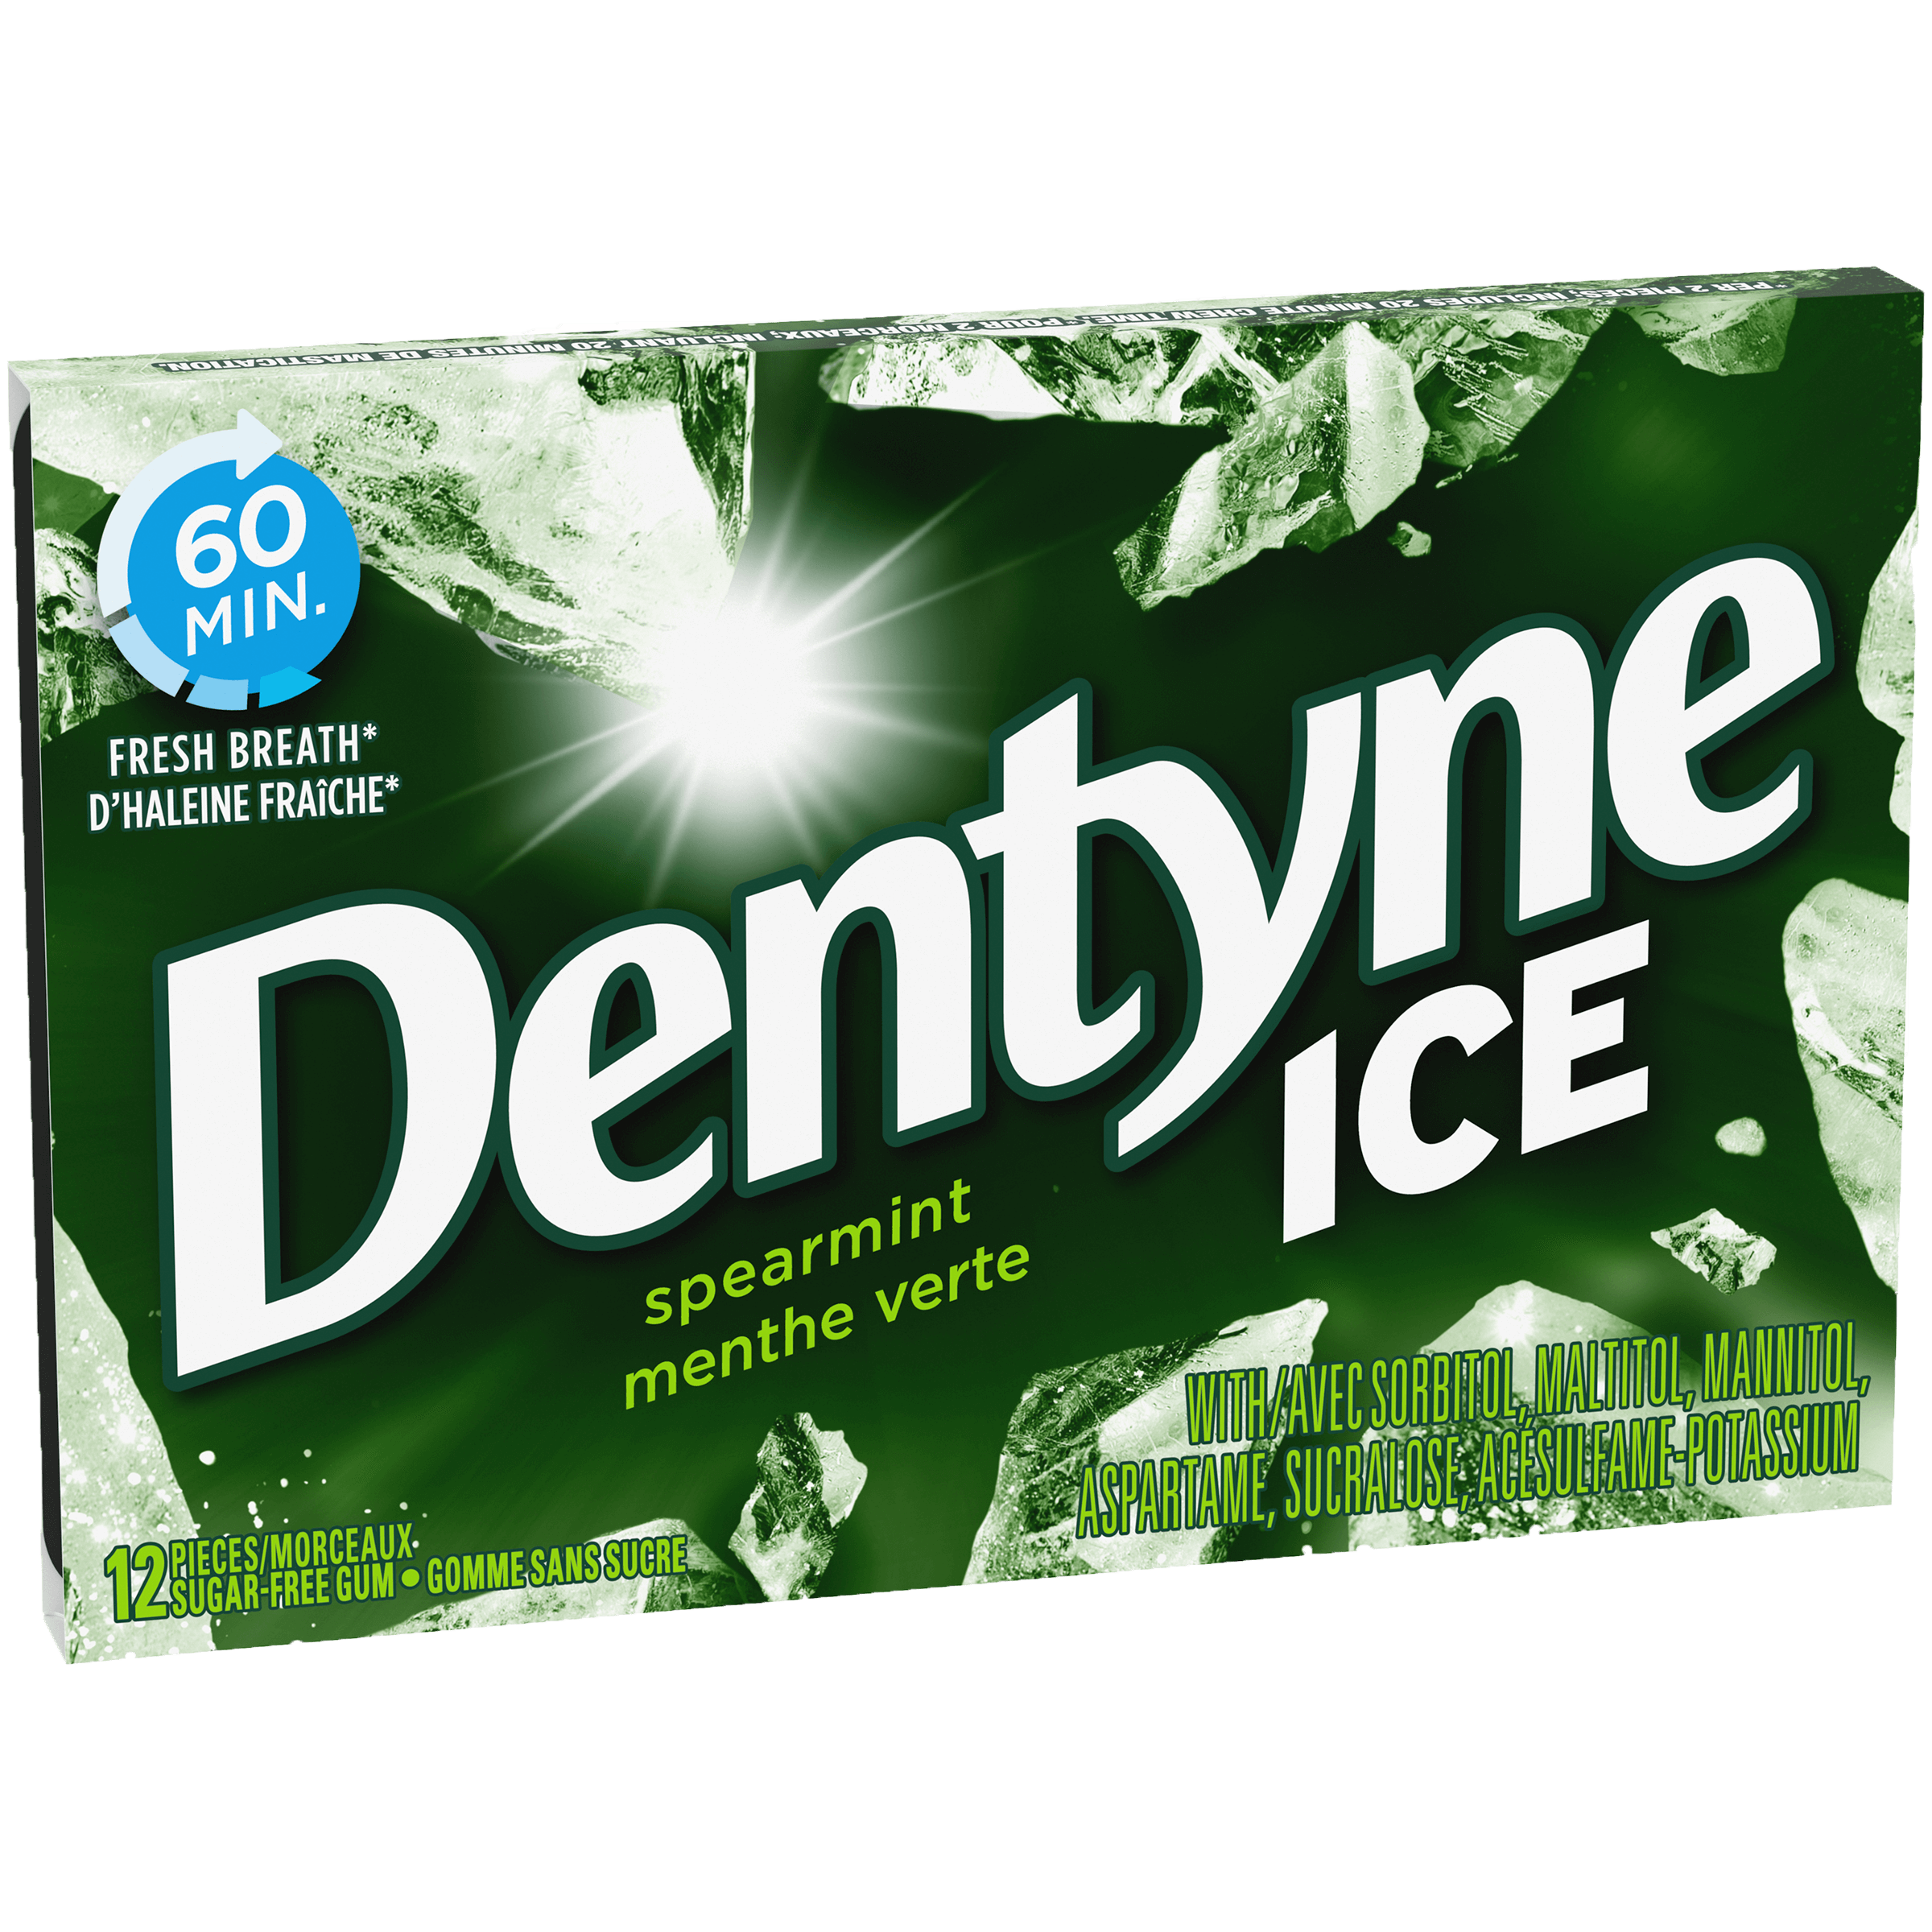 Dentyne ICE Menthe verte